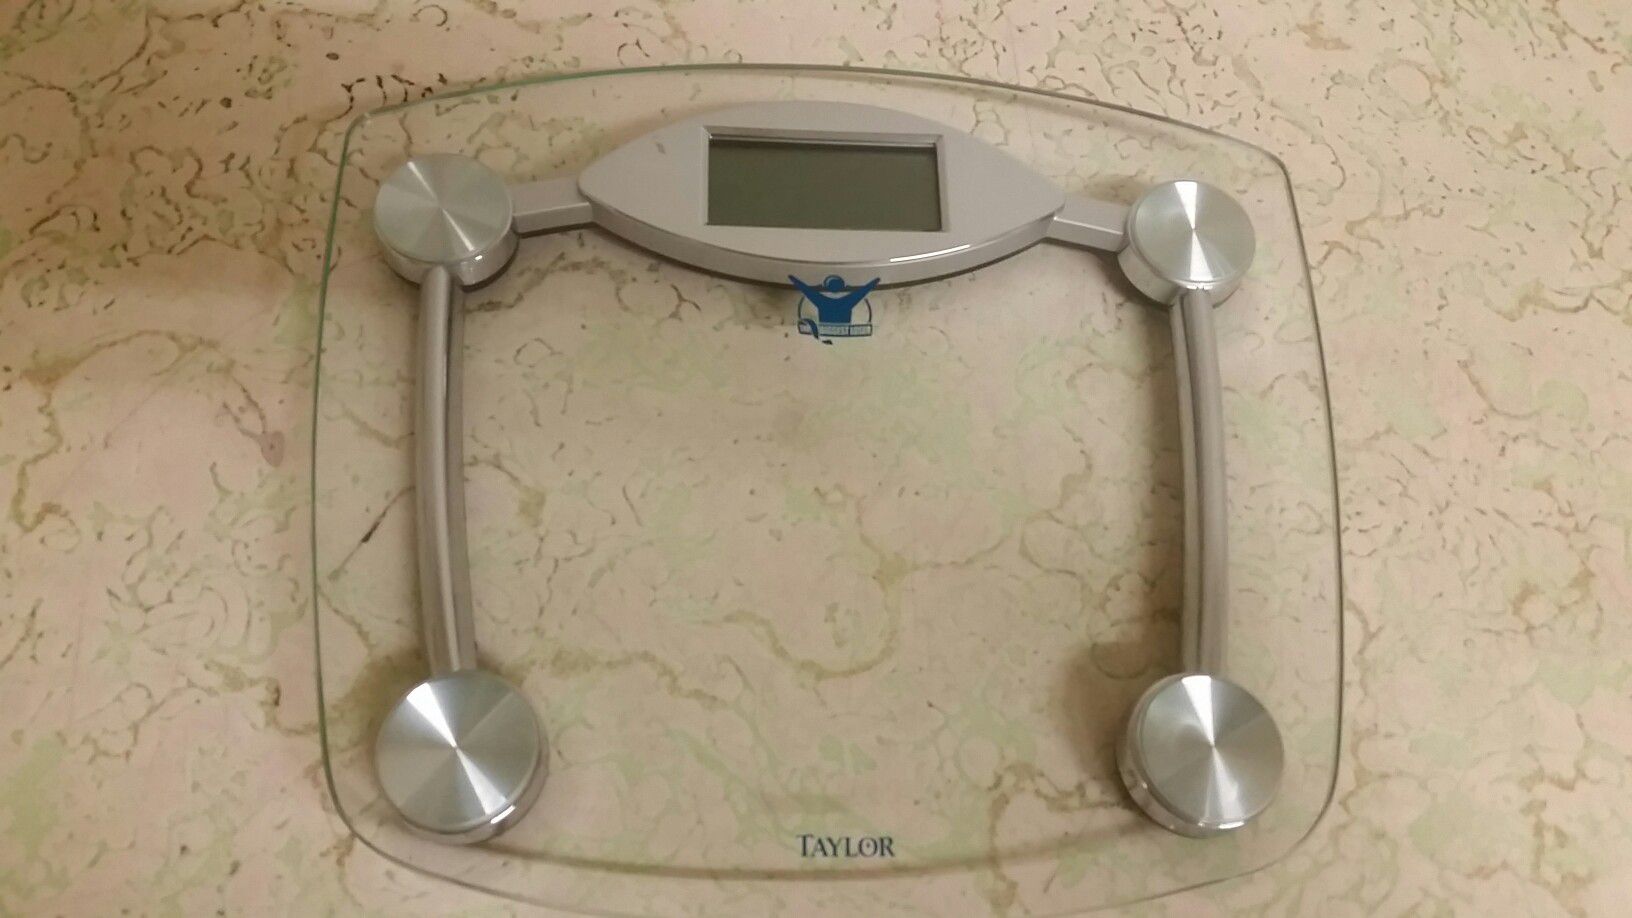 Nice bathroom weigh scale